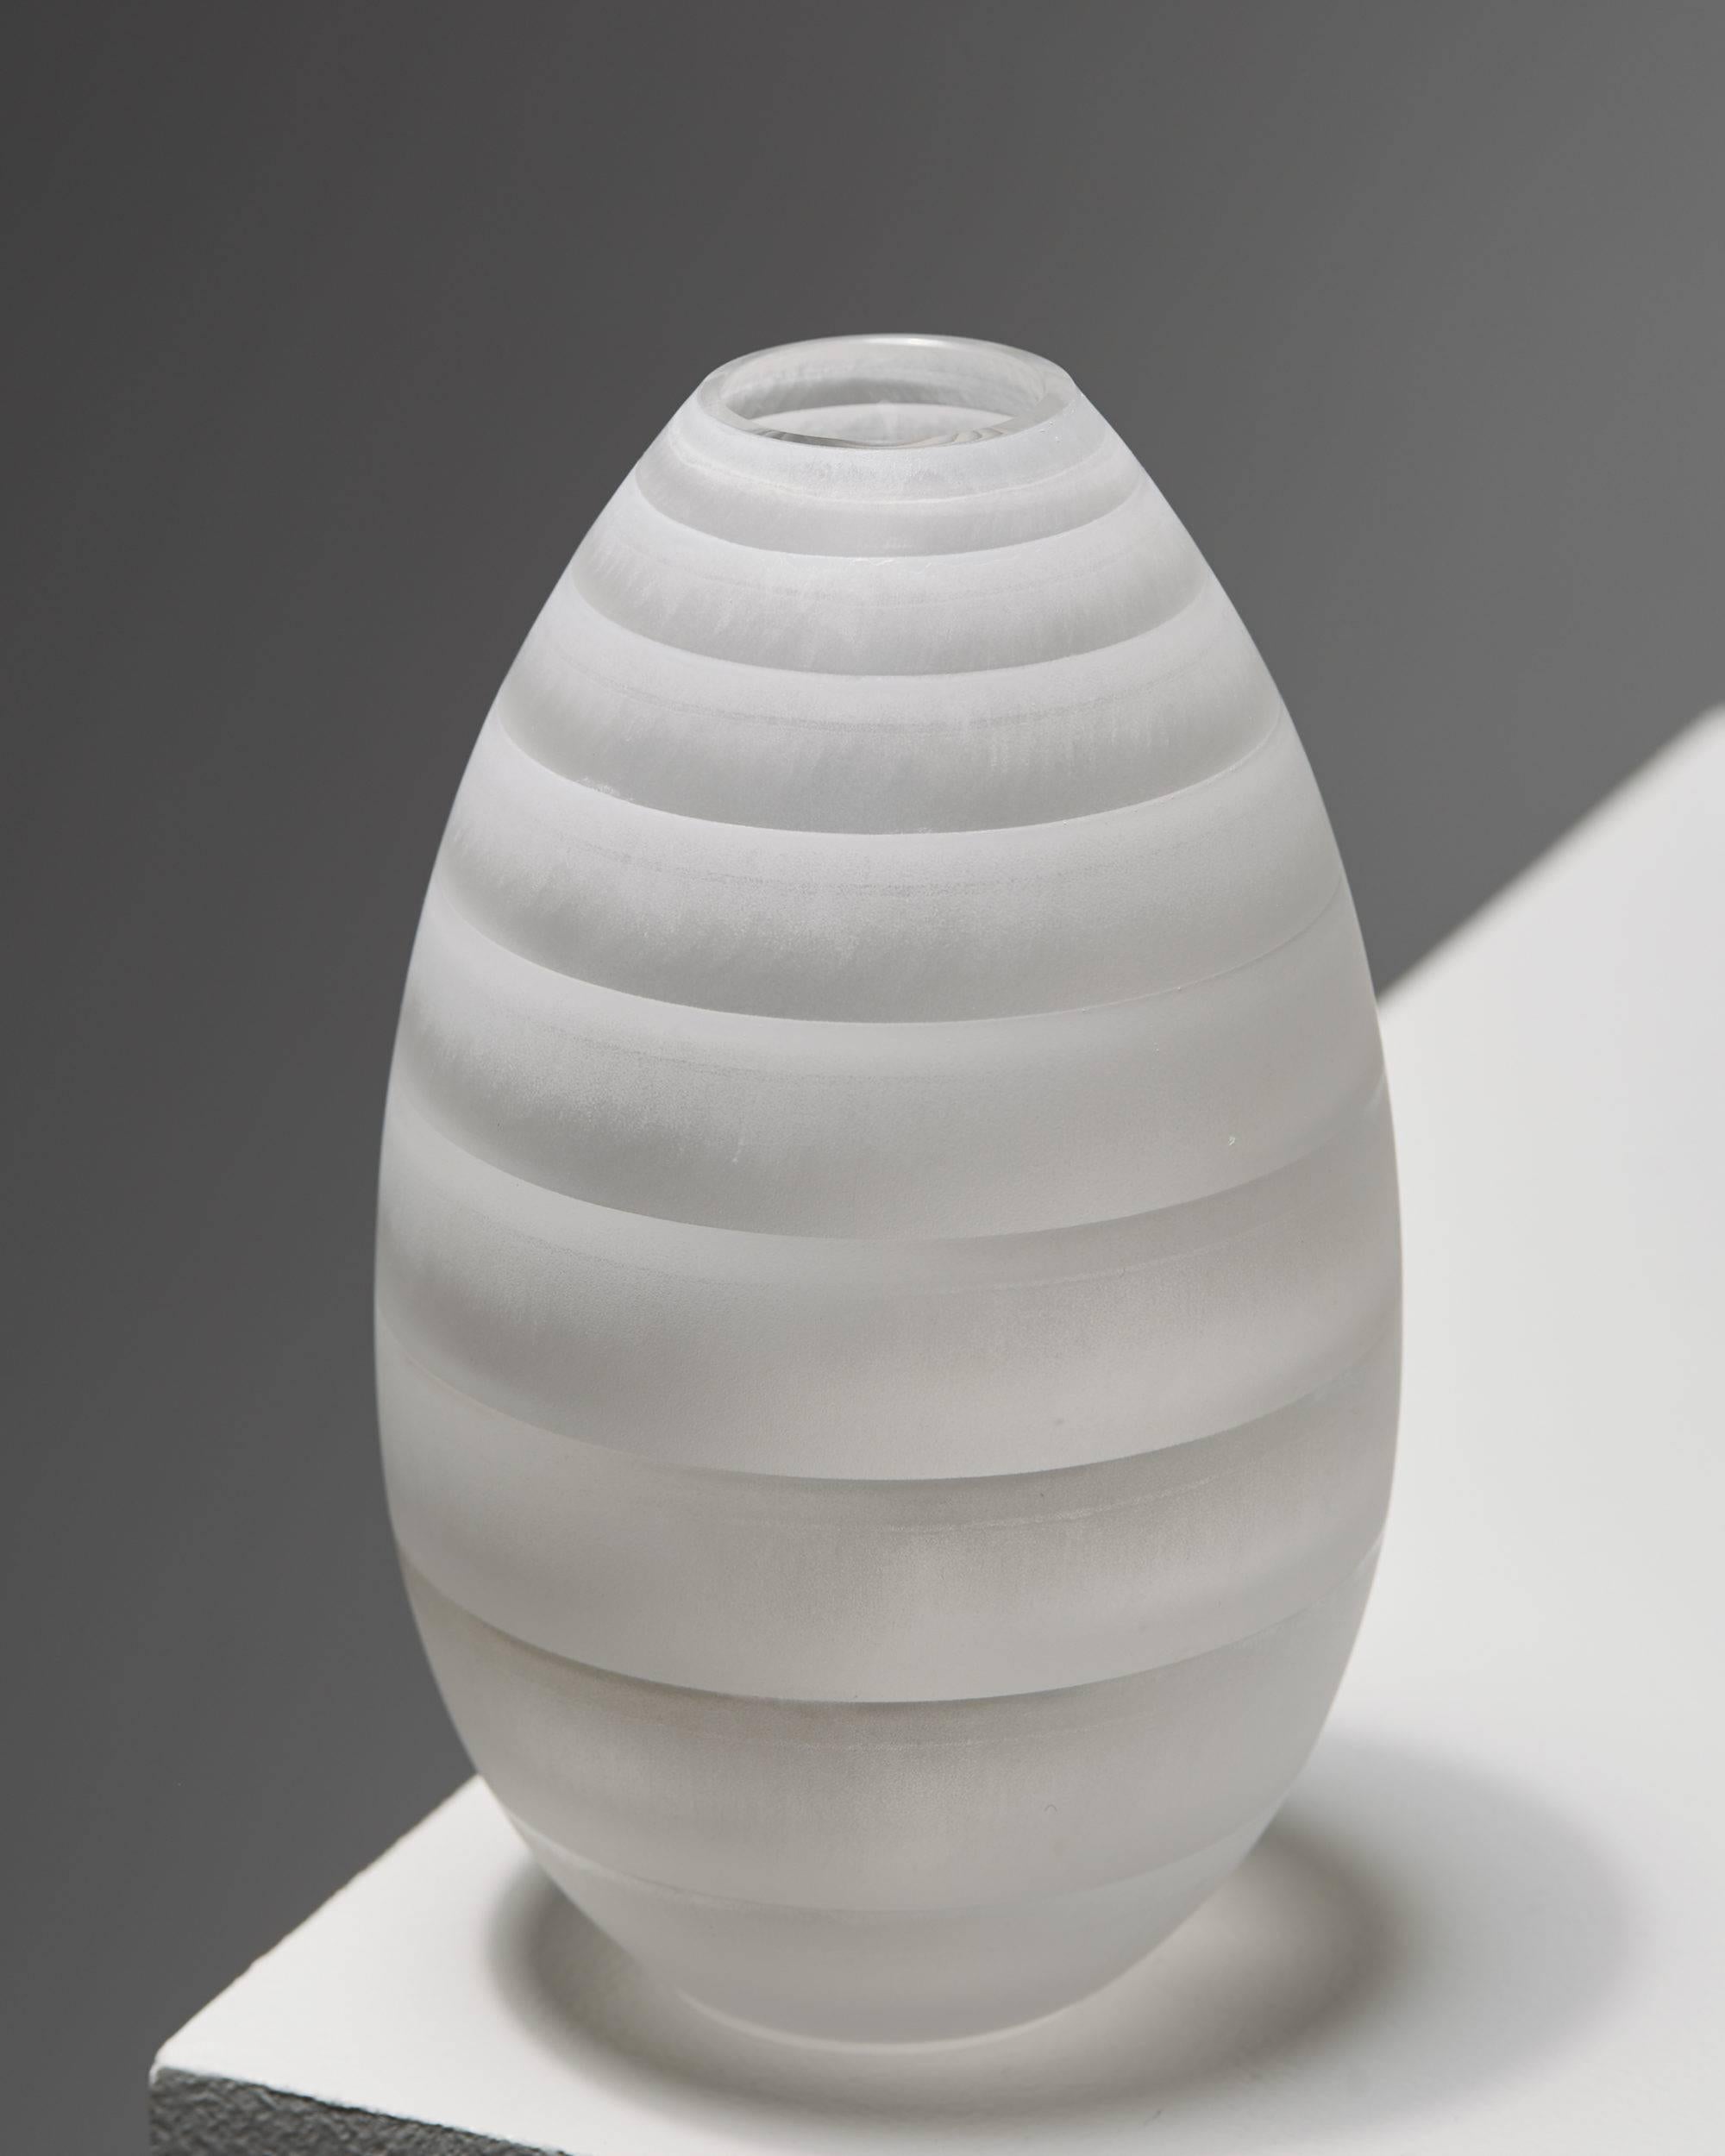 Vase “Bonbon” designed by Ingegerd Råman for Orrefors, 
Sweden 2010.
Glass.

Measures: H 15 cm/ 5 7/8